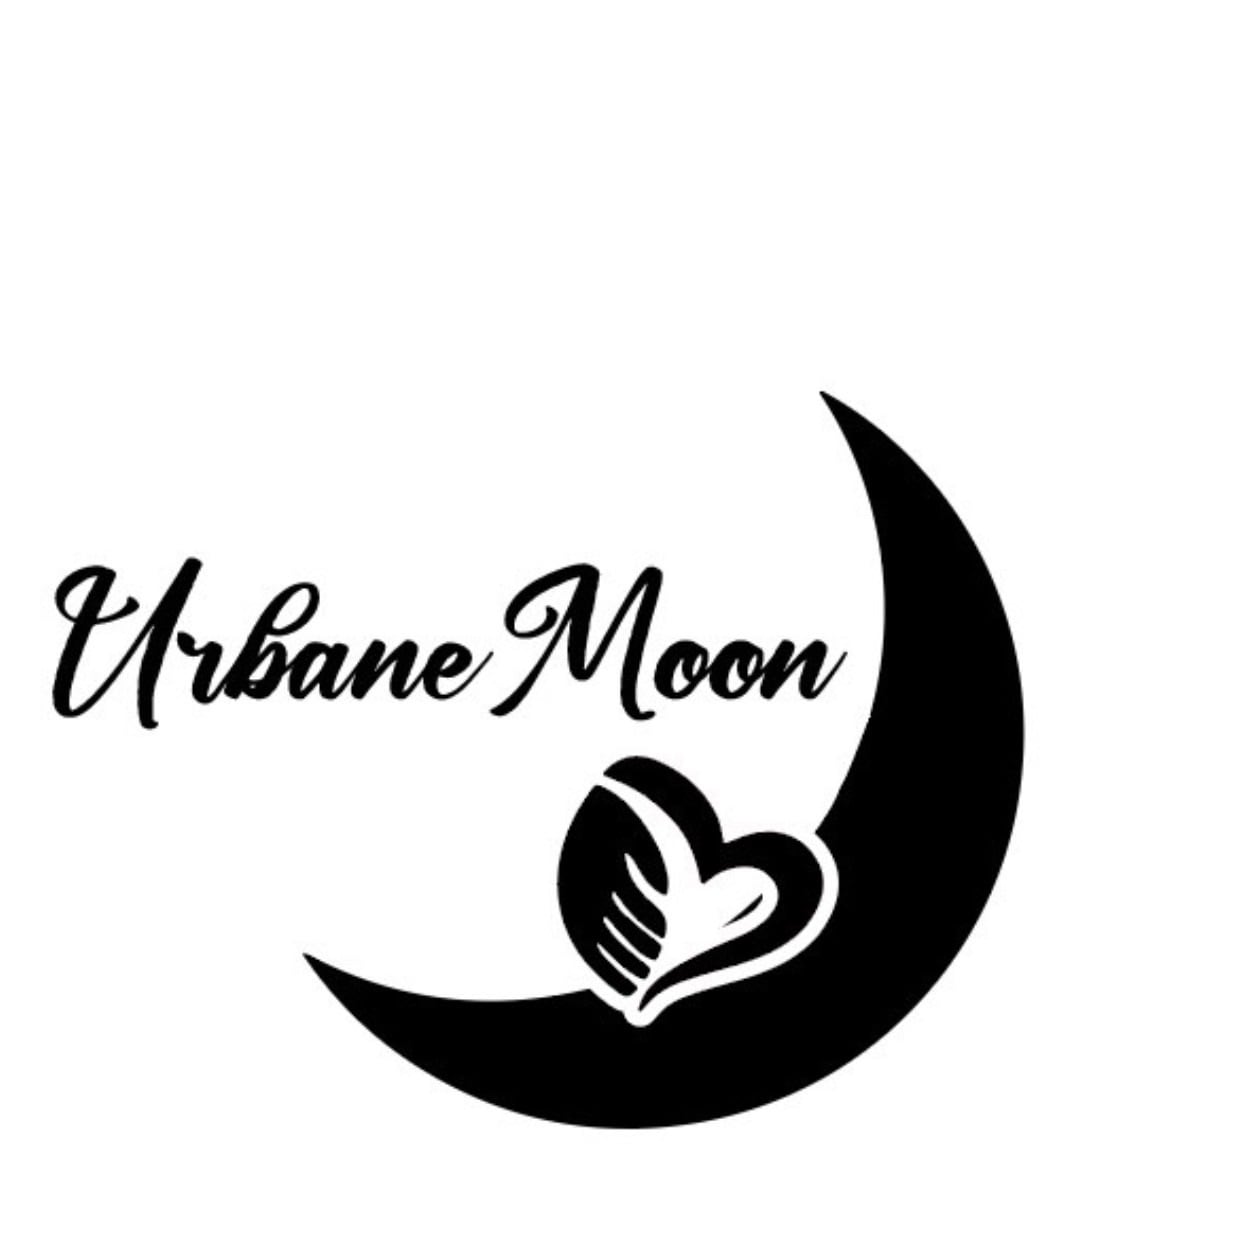 Urbane Moon